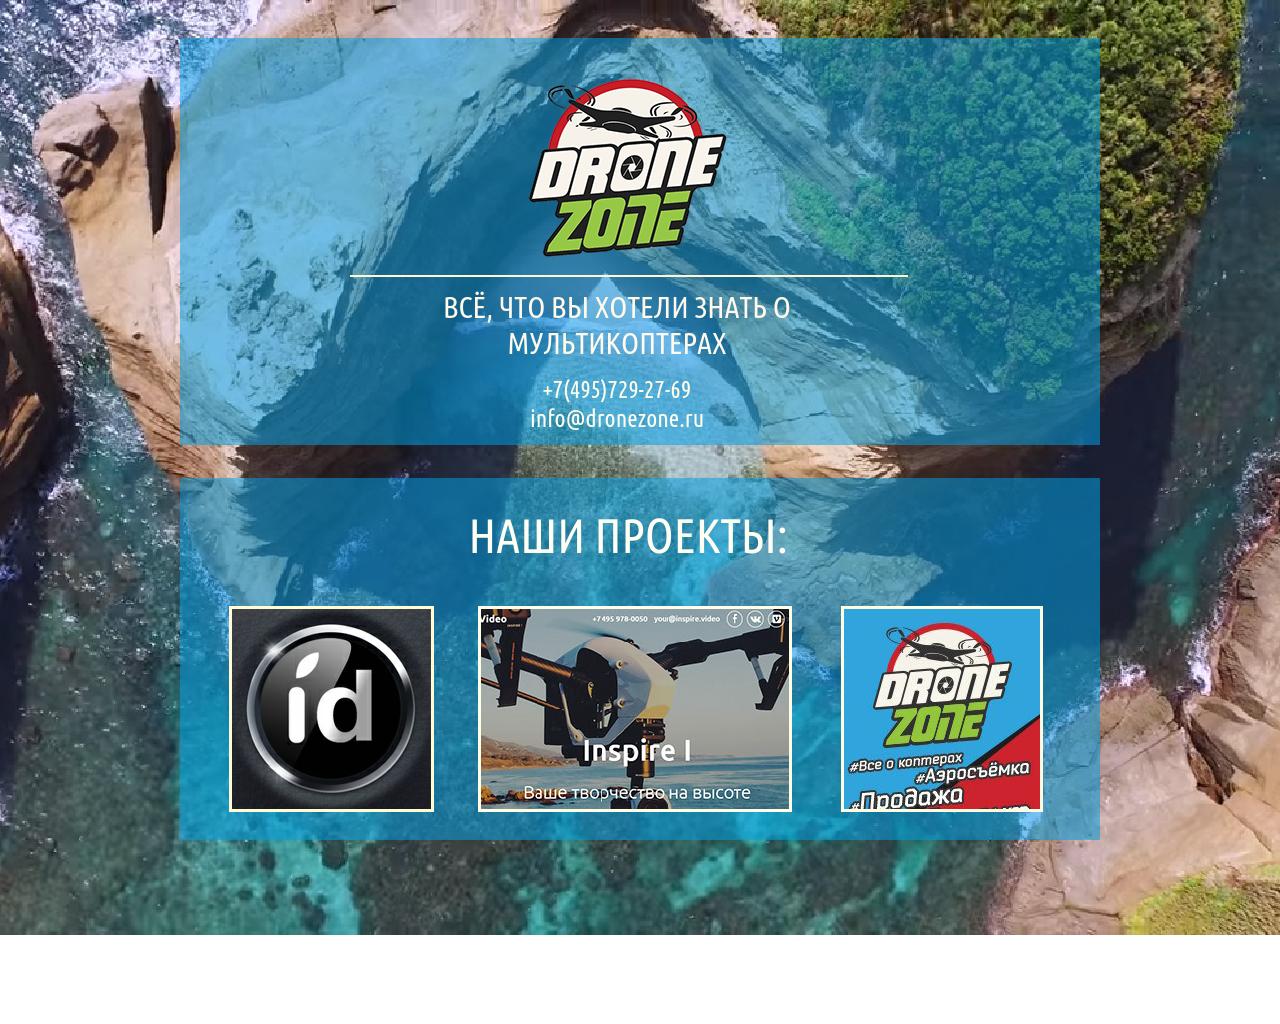 Изображение сайта dronezone.ru в разрешении 1280x1024